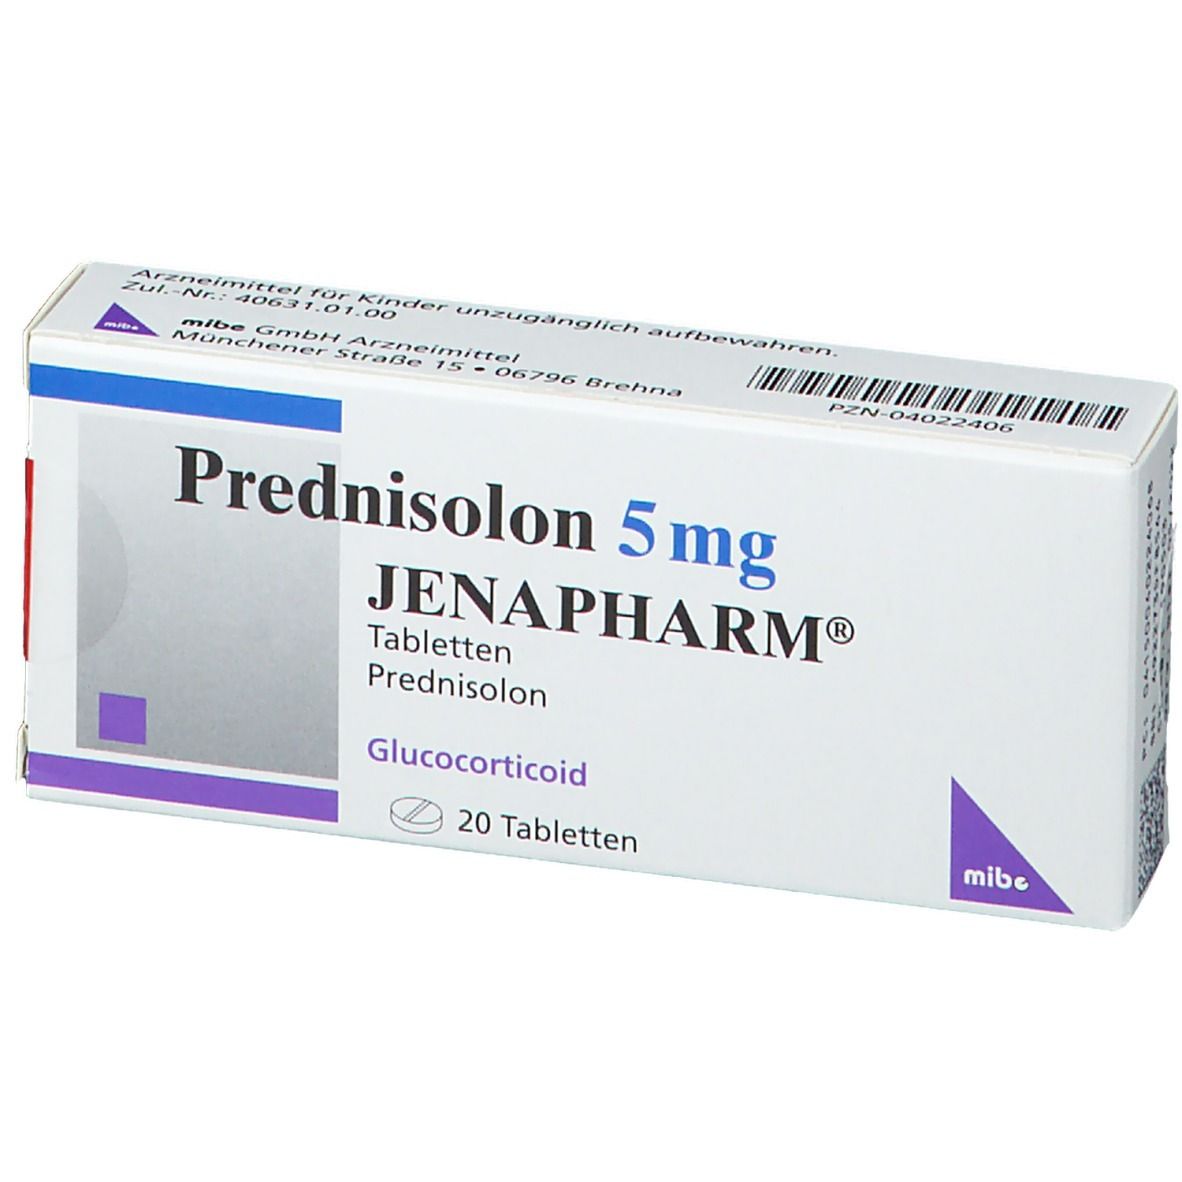 Prednisolon 5 mg JENAPHARM®